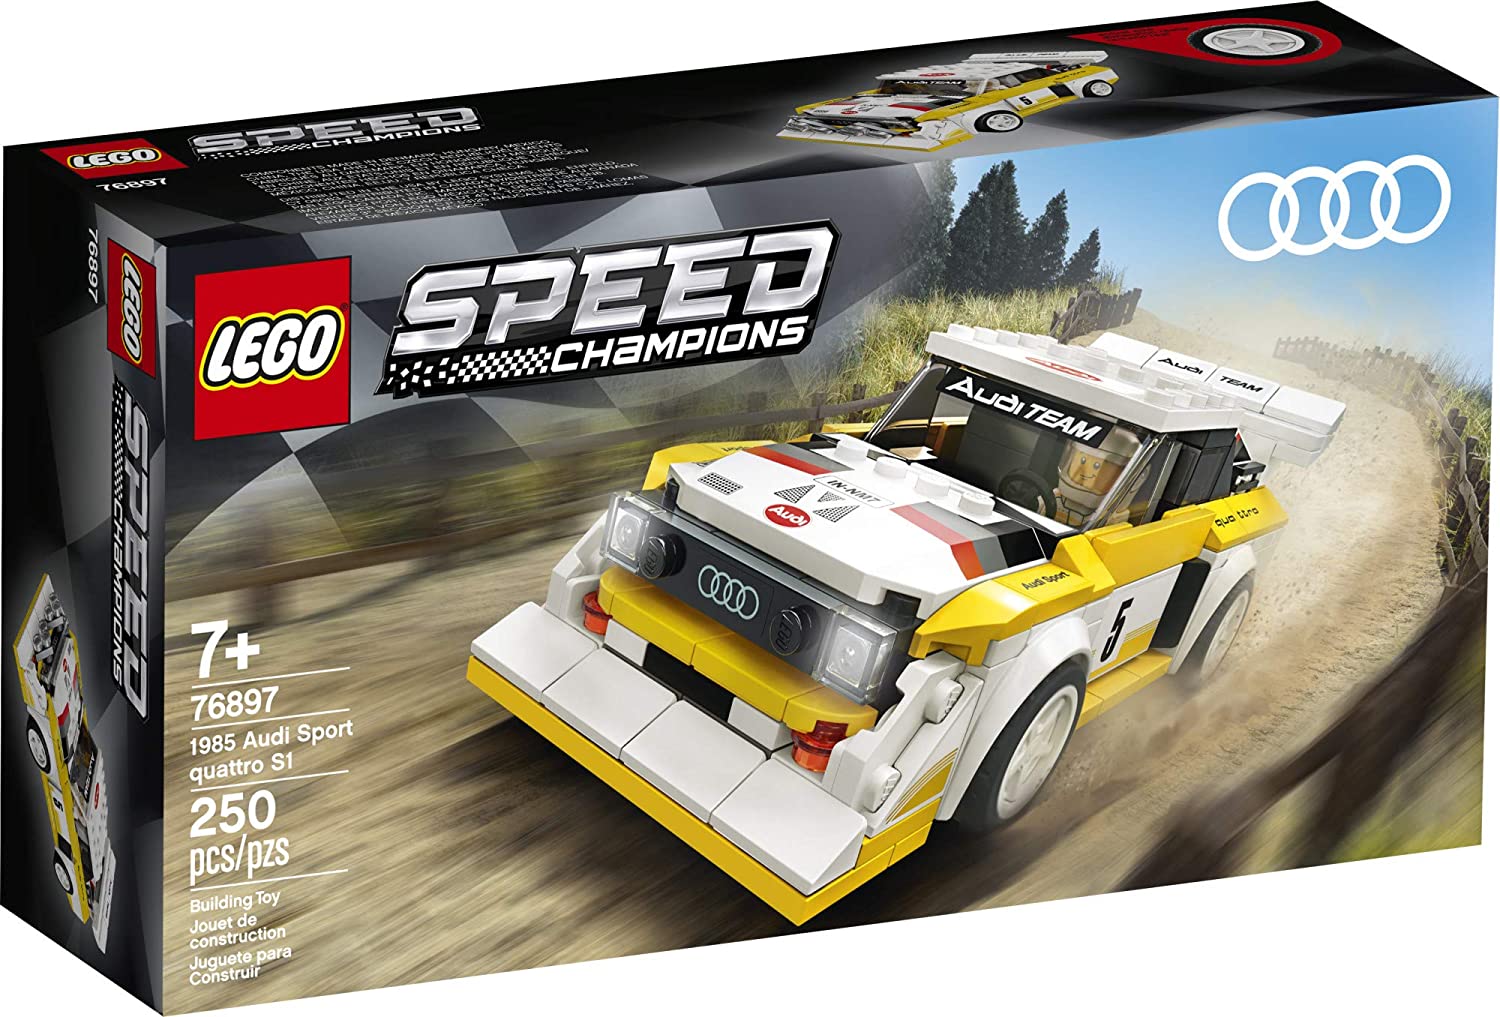 LEGO 乐高 超级赛车 76897 Audi 奥迪S1竞速超跑积木拼插玩具包邮